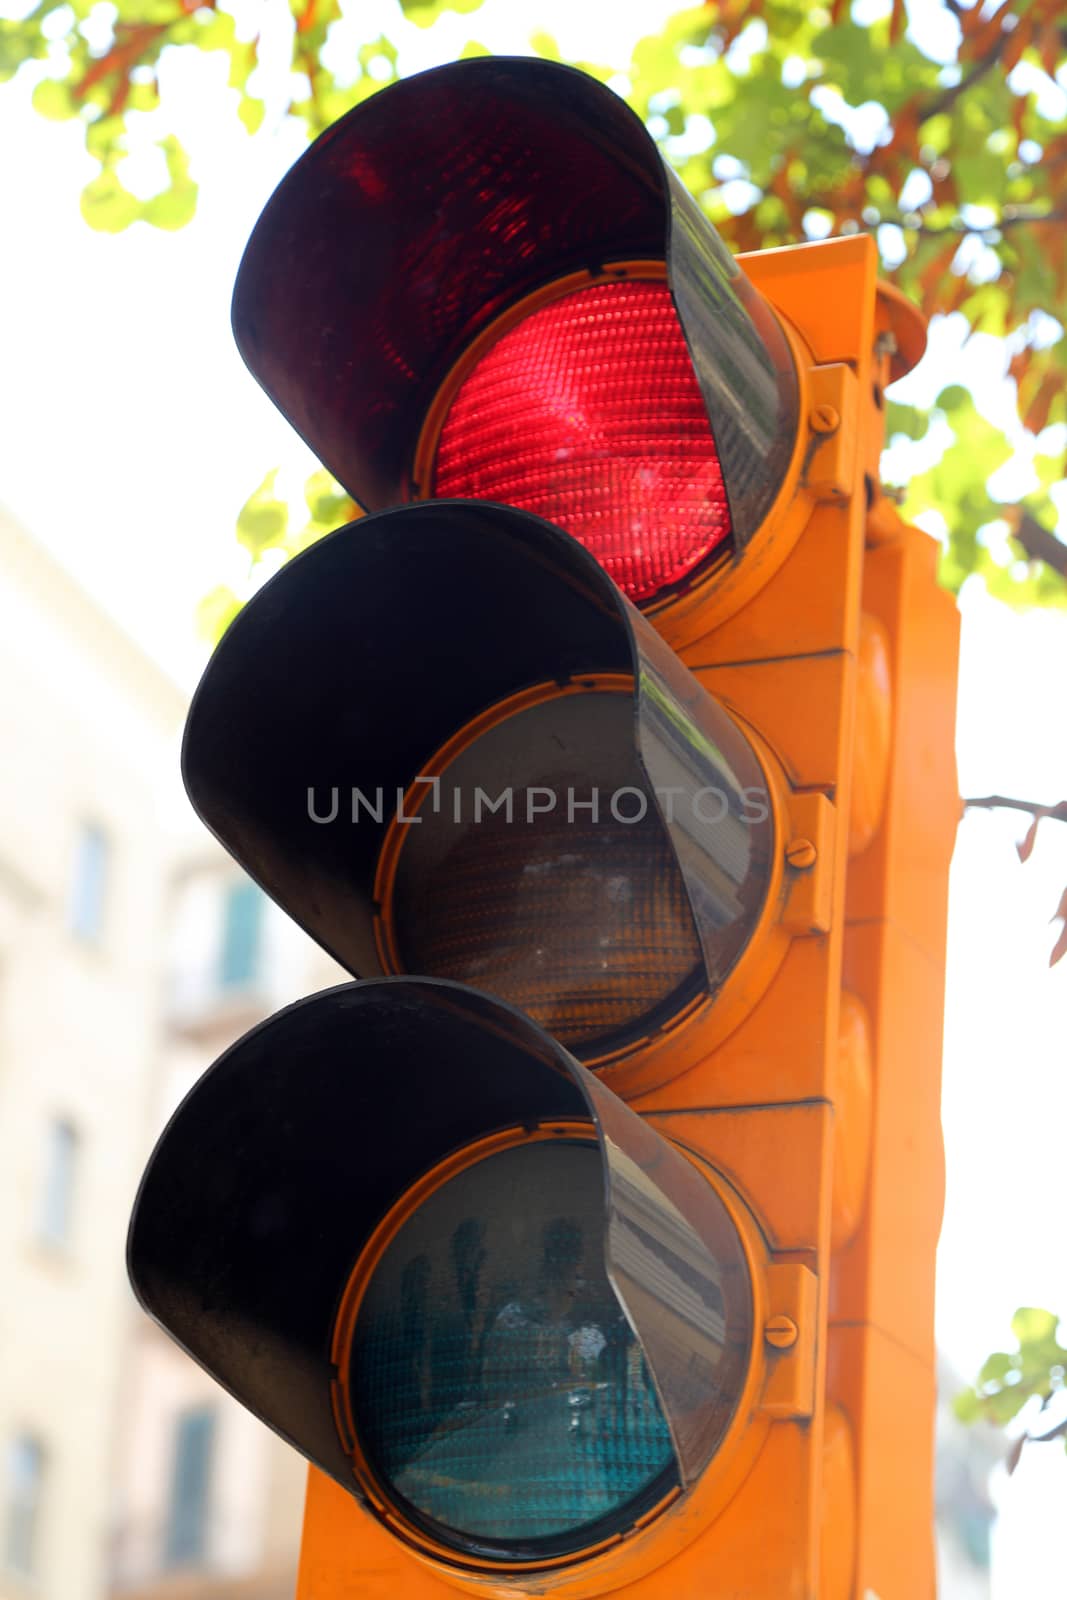 Traffic light to regulate traffic flow by antonionardelli